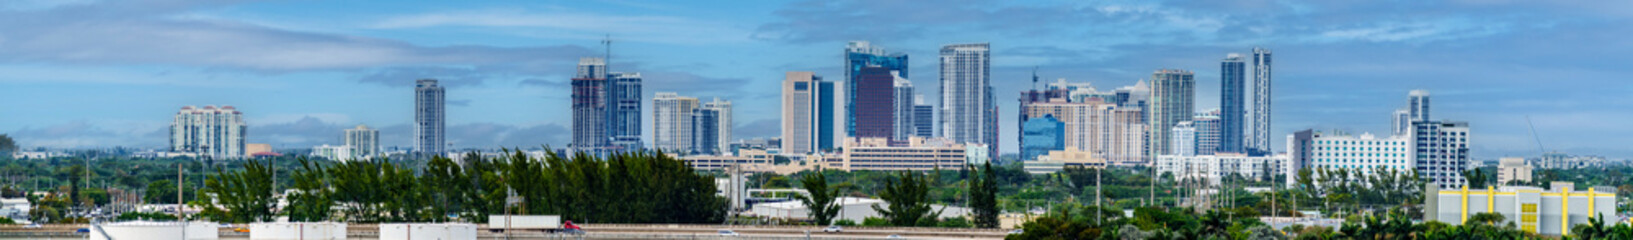 Panorama stock photo Downtown Fort Lauderdale Florida 2024